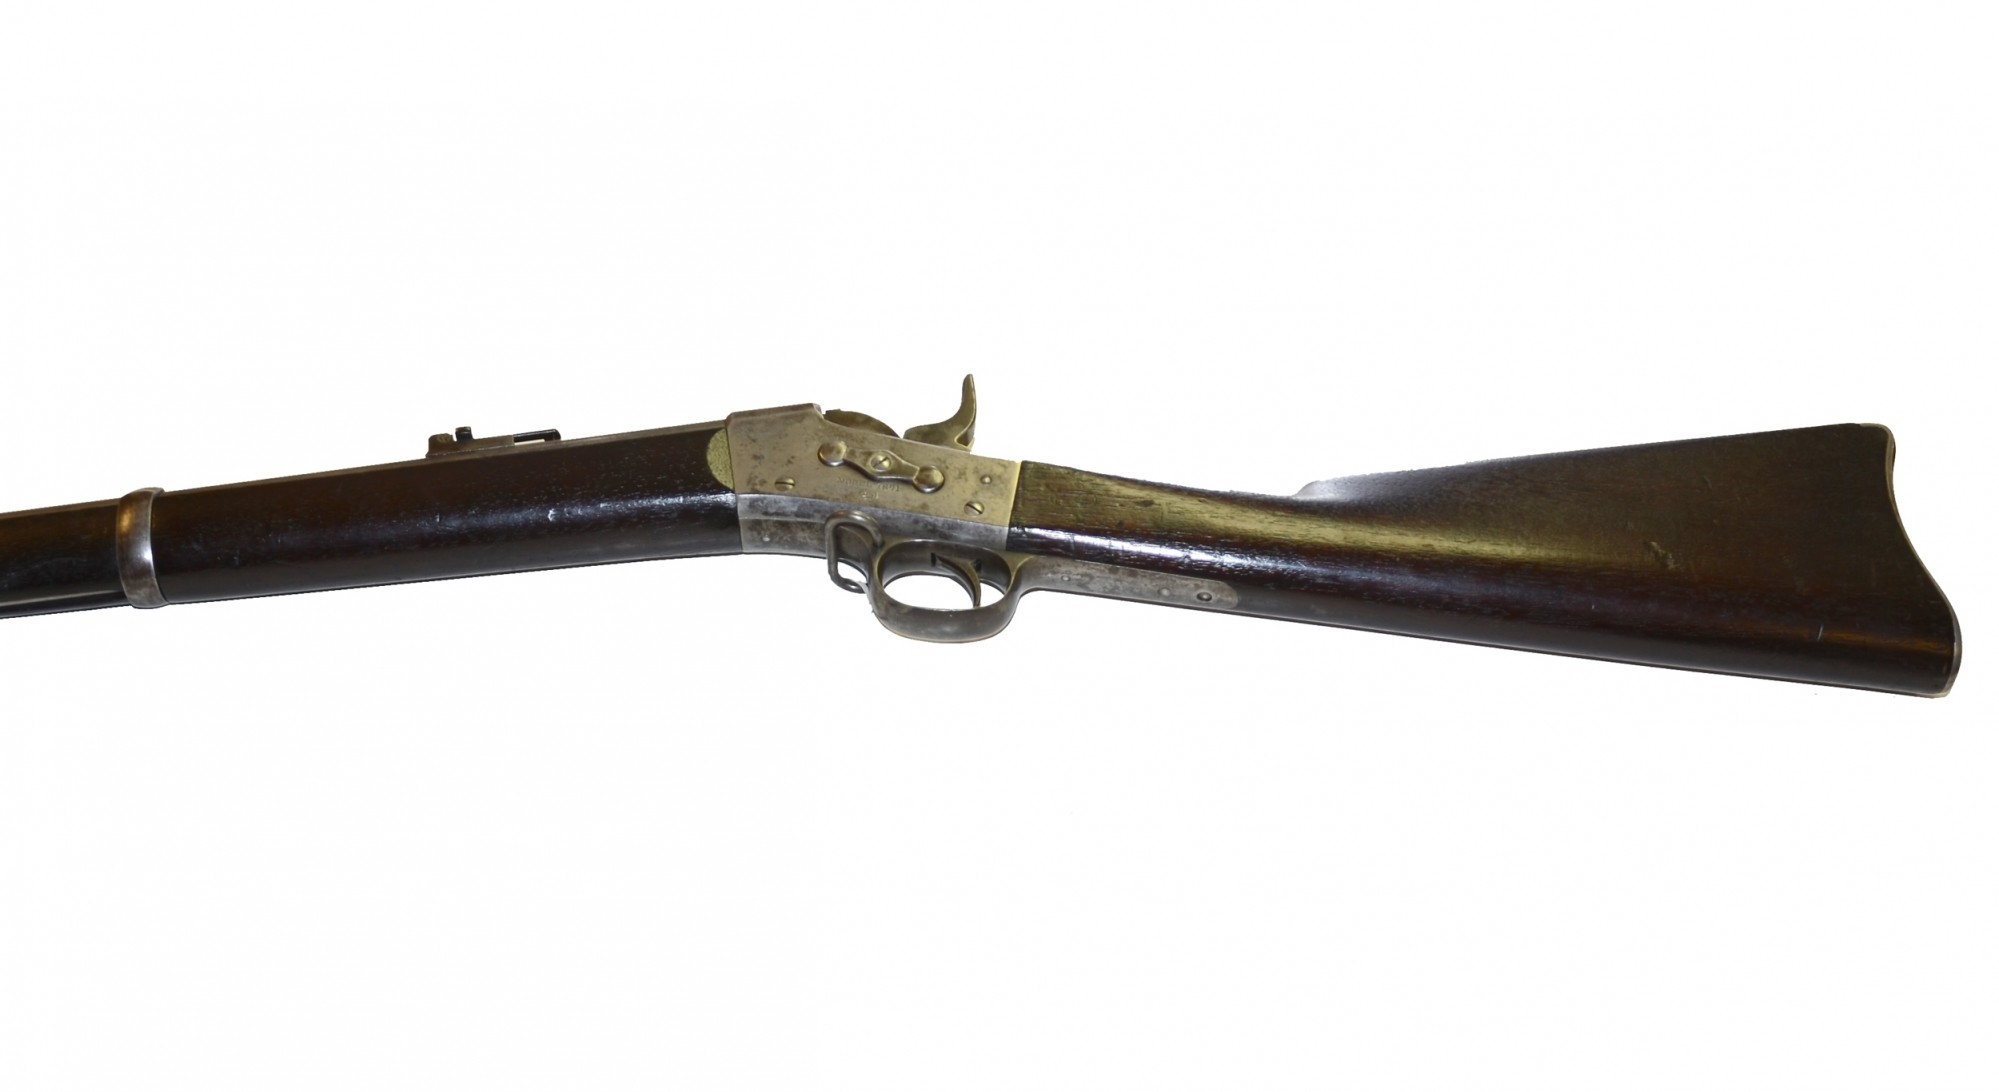 remington pat. nov 15th 1864 17 18